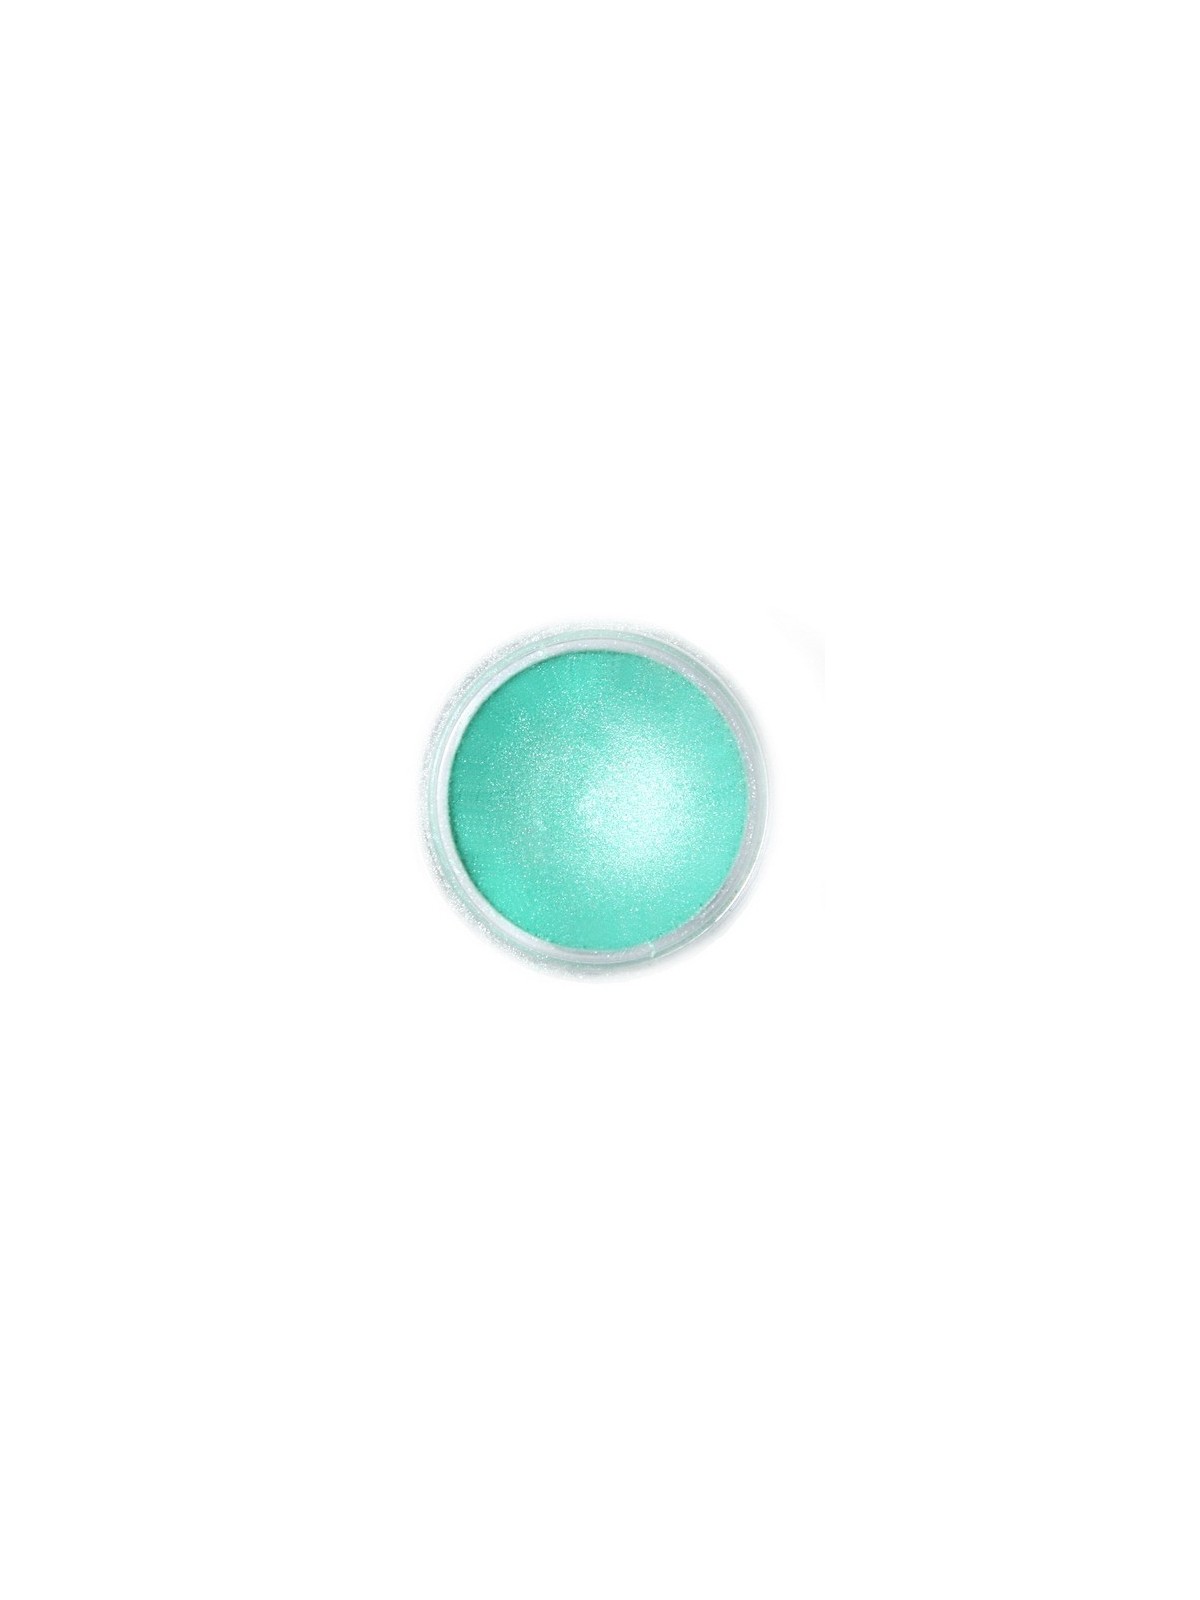 Jedlá prachová perleťová barva Fractal - Aurora Green, Zöld sarki fény (2 g)